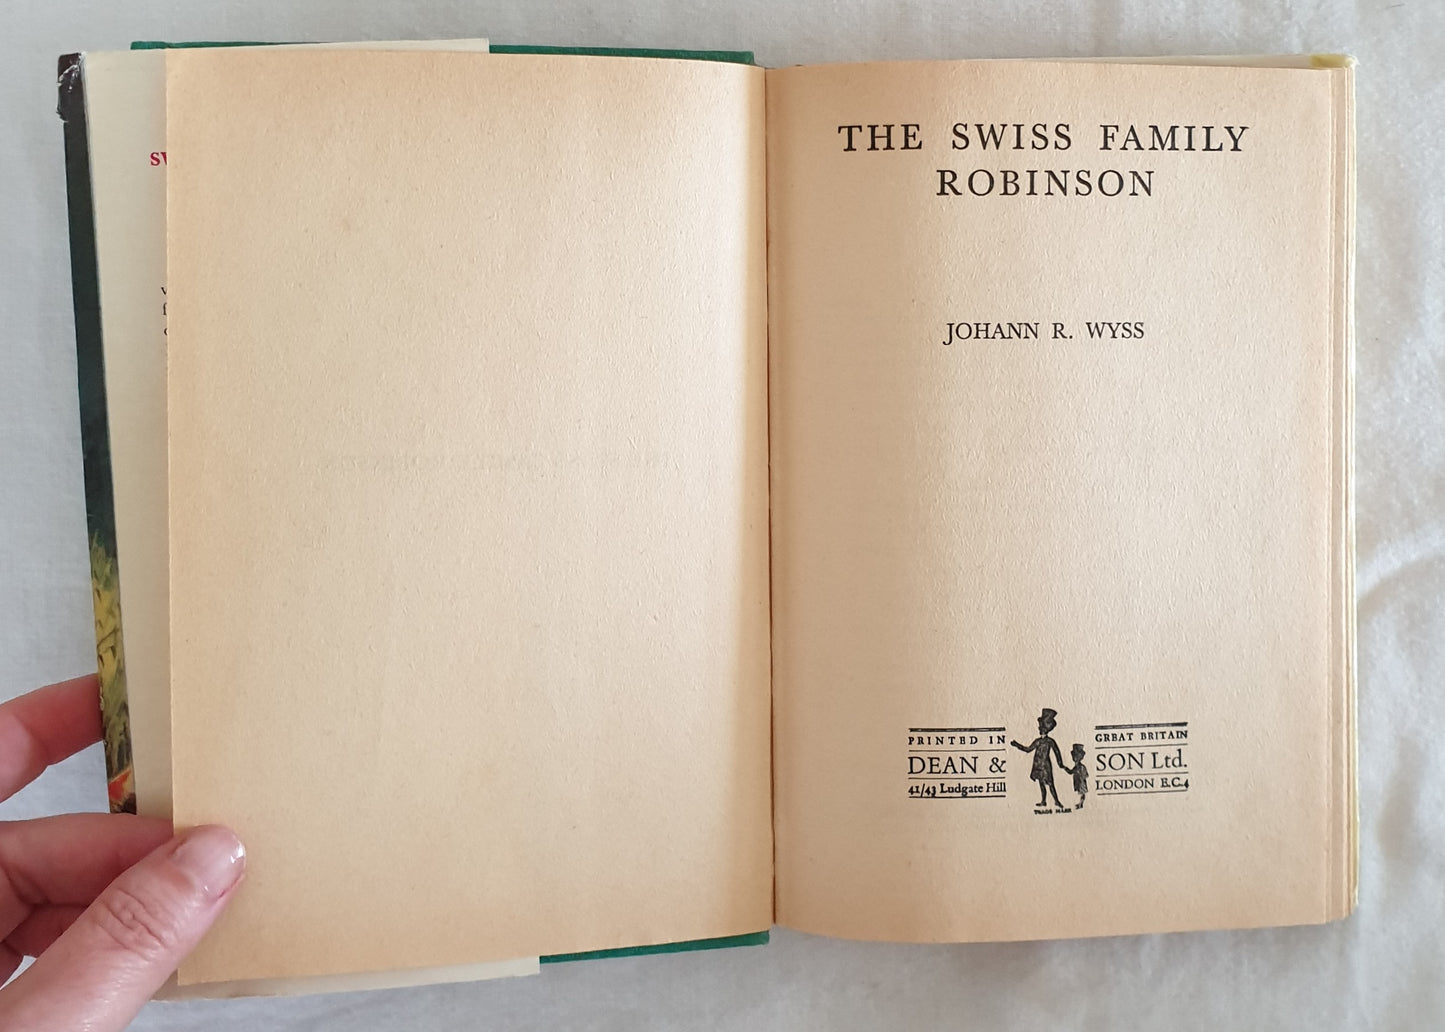 The Swiss Family Robinson by Johann R. Wyss